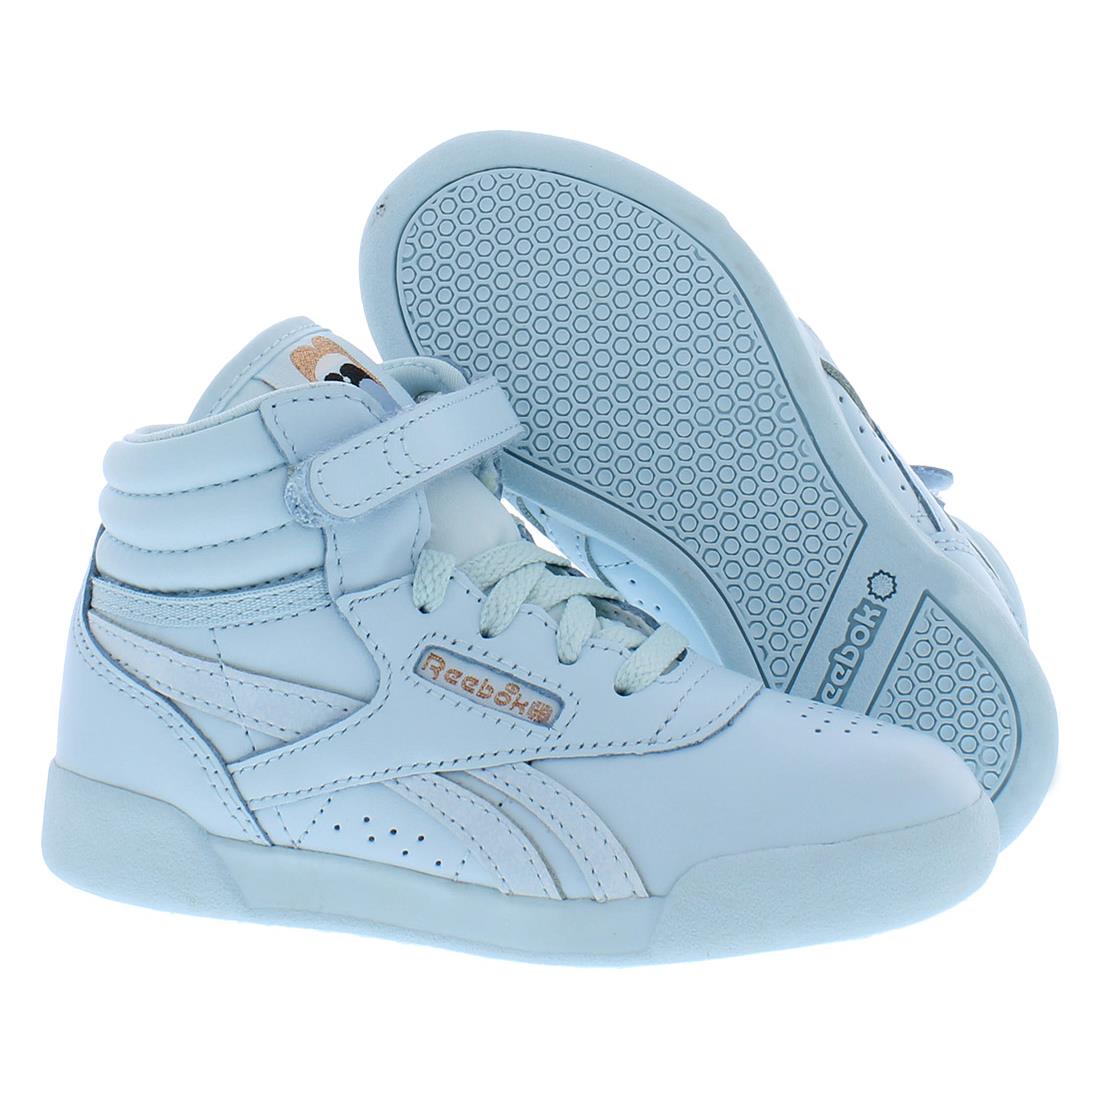 Reebok Cardi B F/s Hi Infant/toddler Shoes White